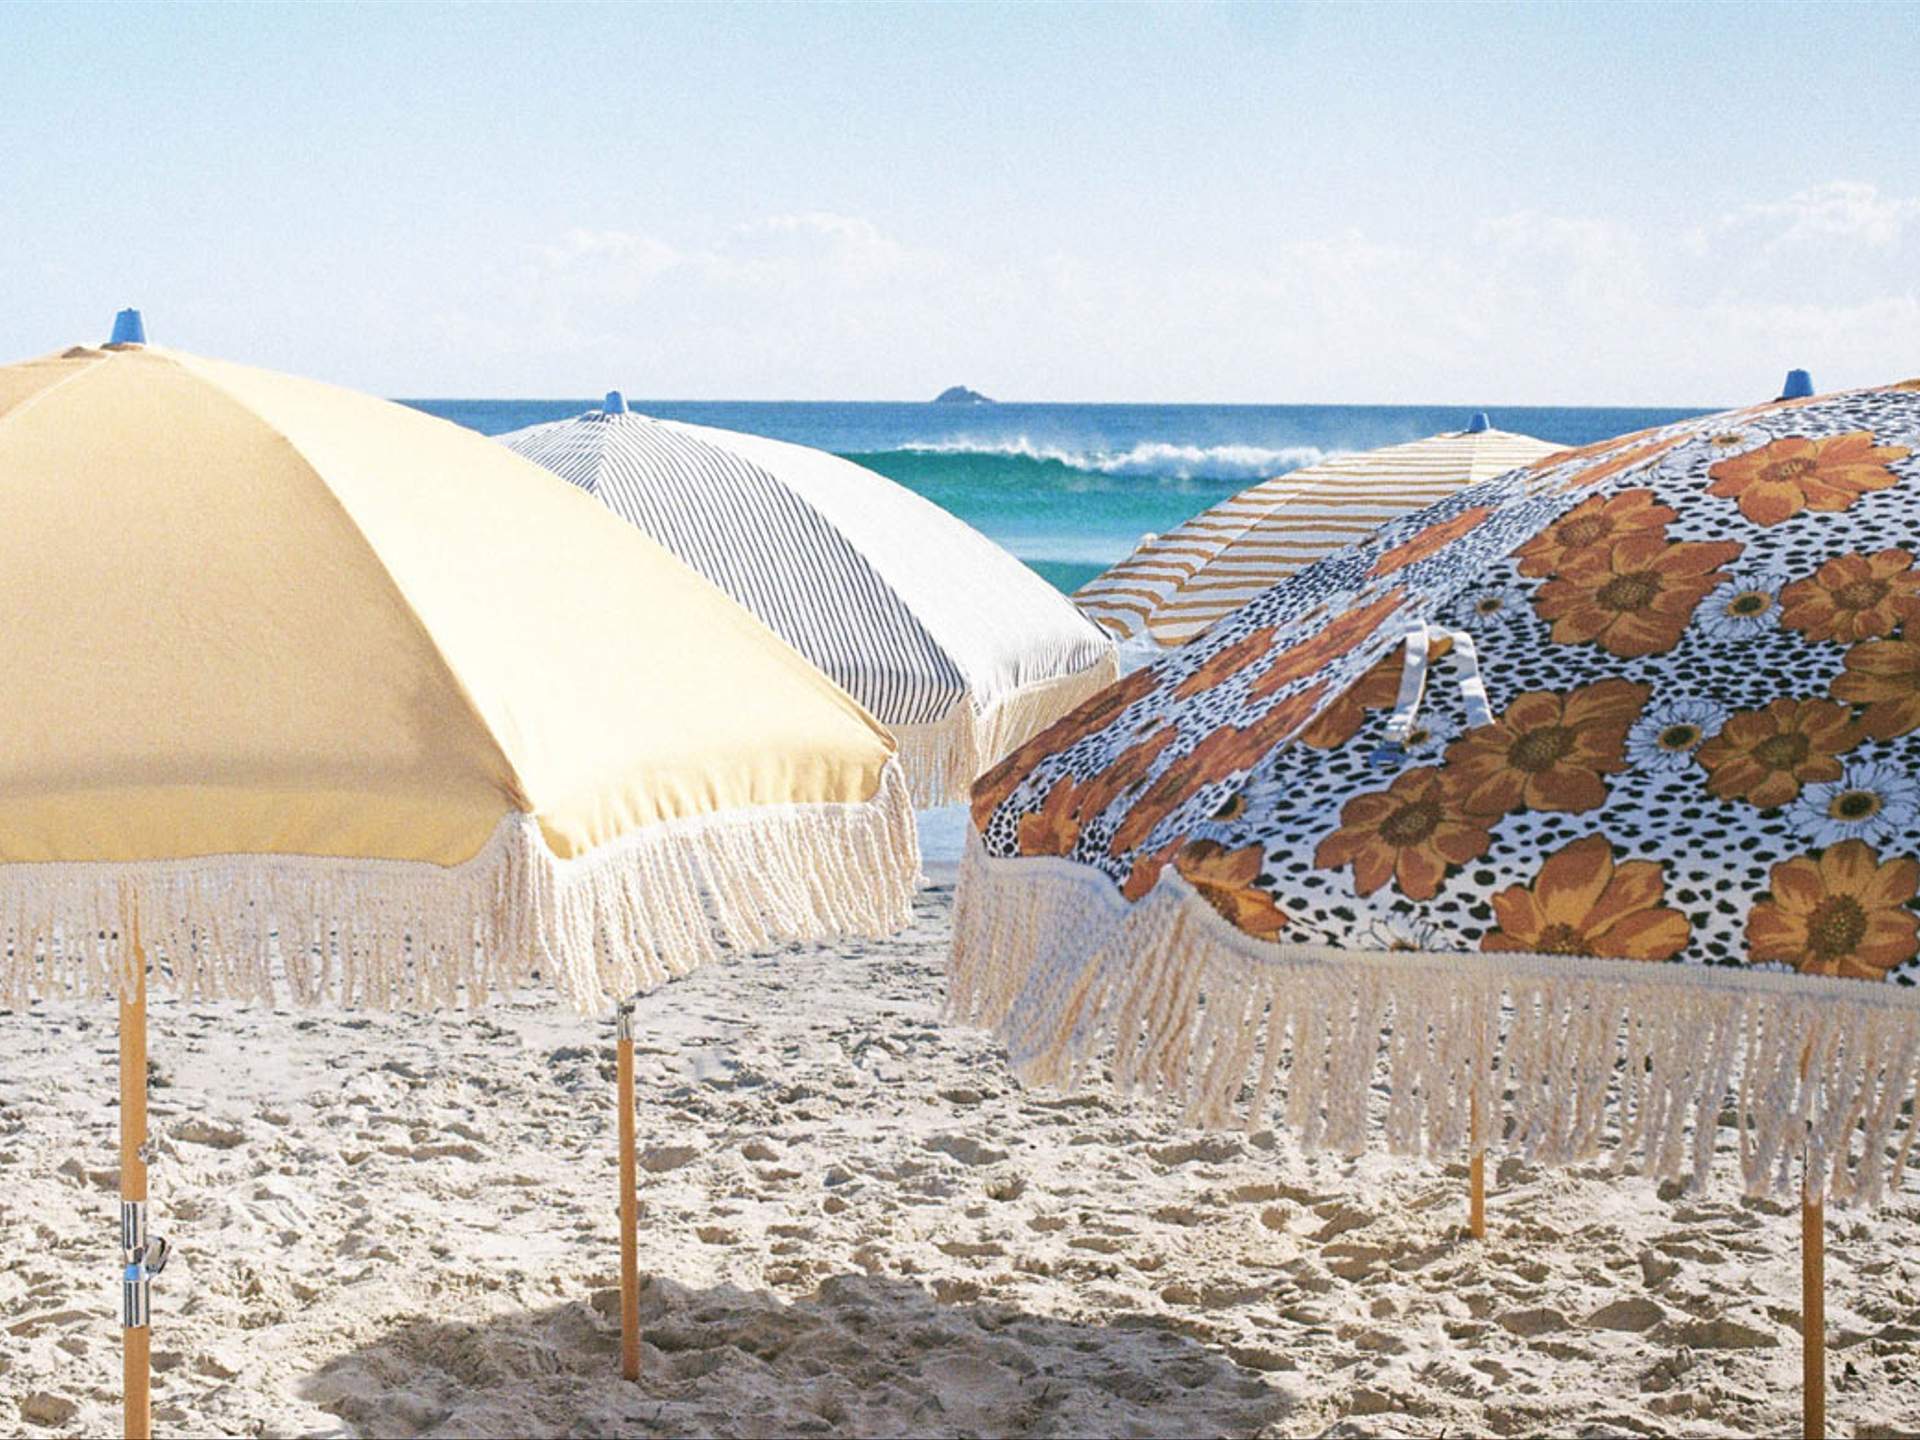 beautiful beach umbrellas